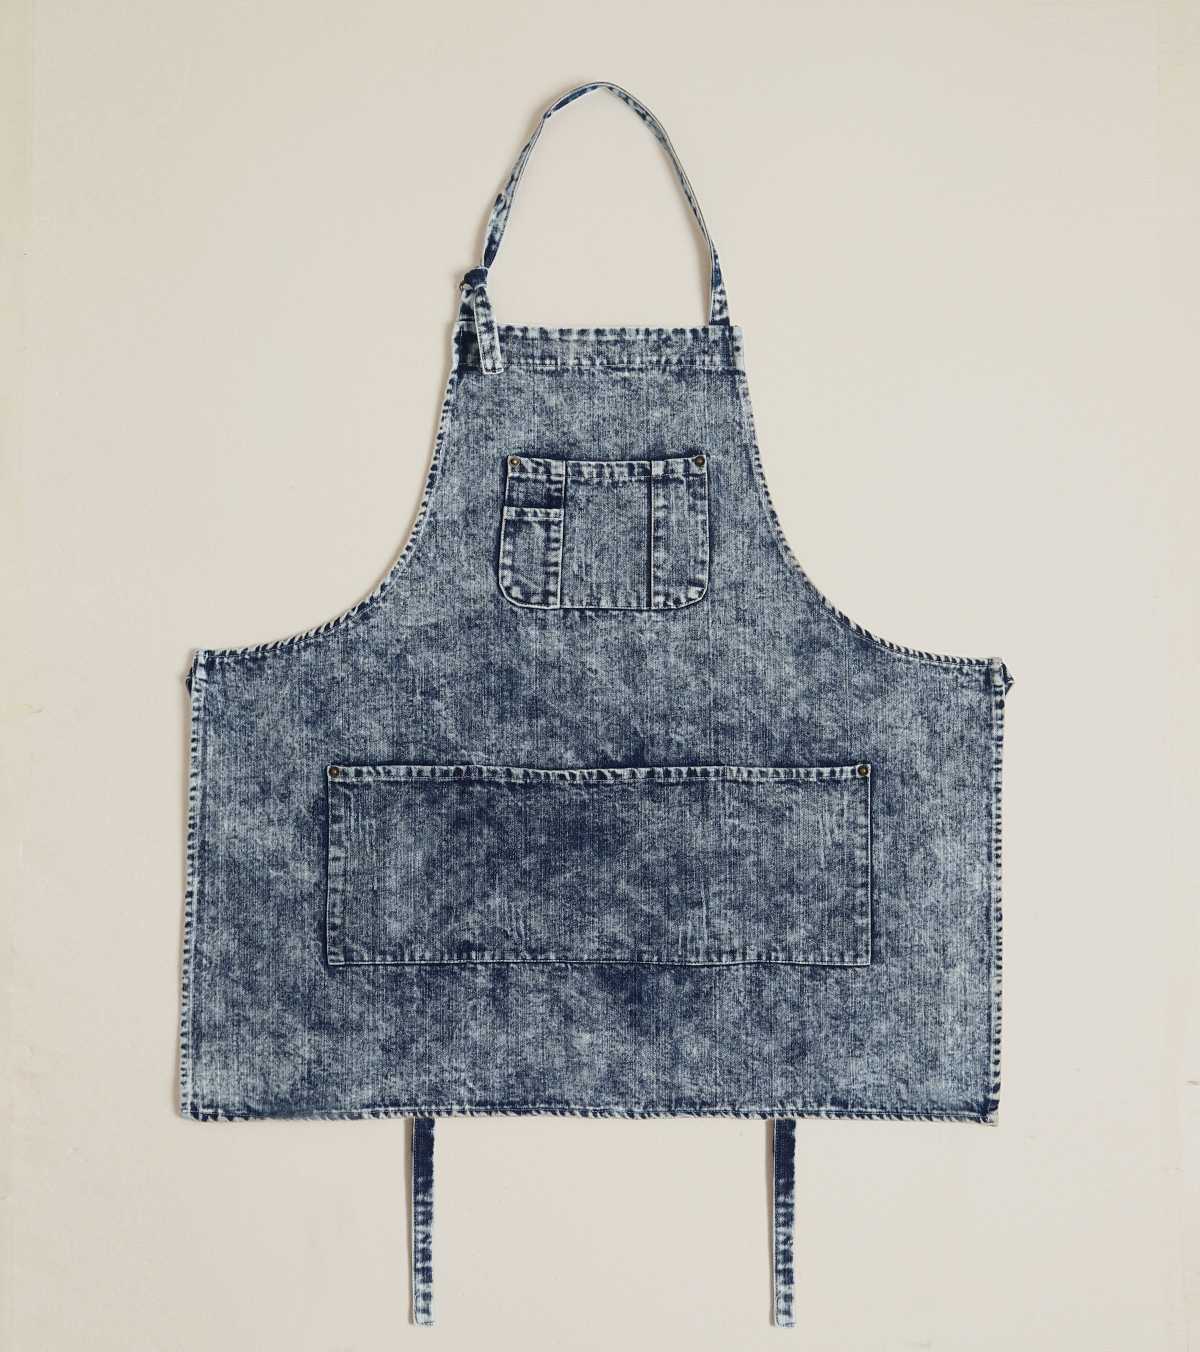 Distressed cotton denim apron QS-NZ0058-EAPRON- Apron, Oven mitt, Pot holder, Tea towel, Table cloth